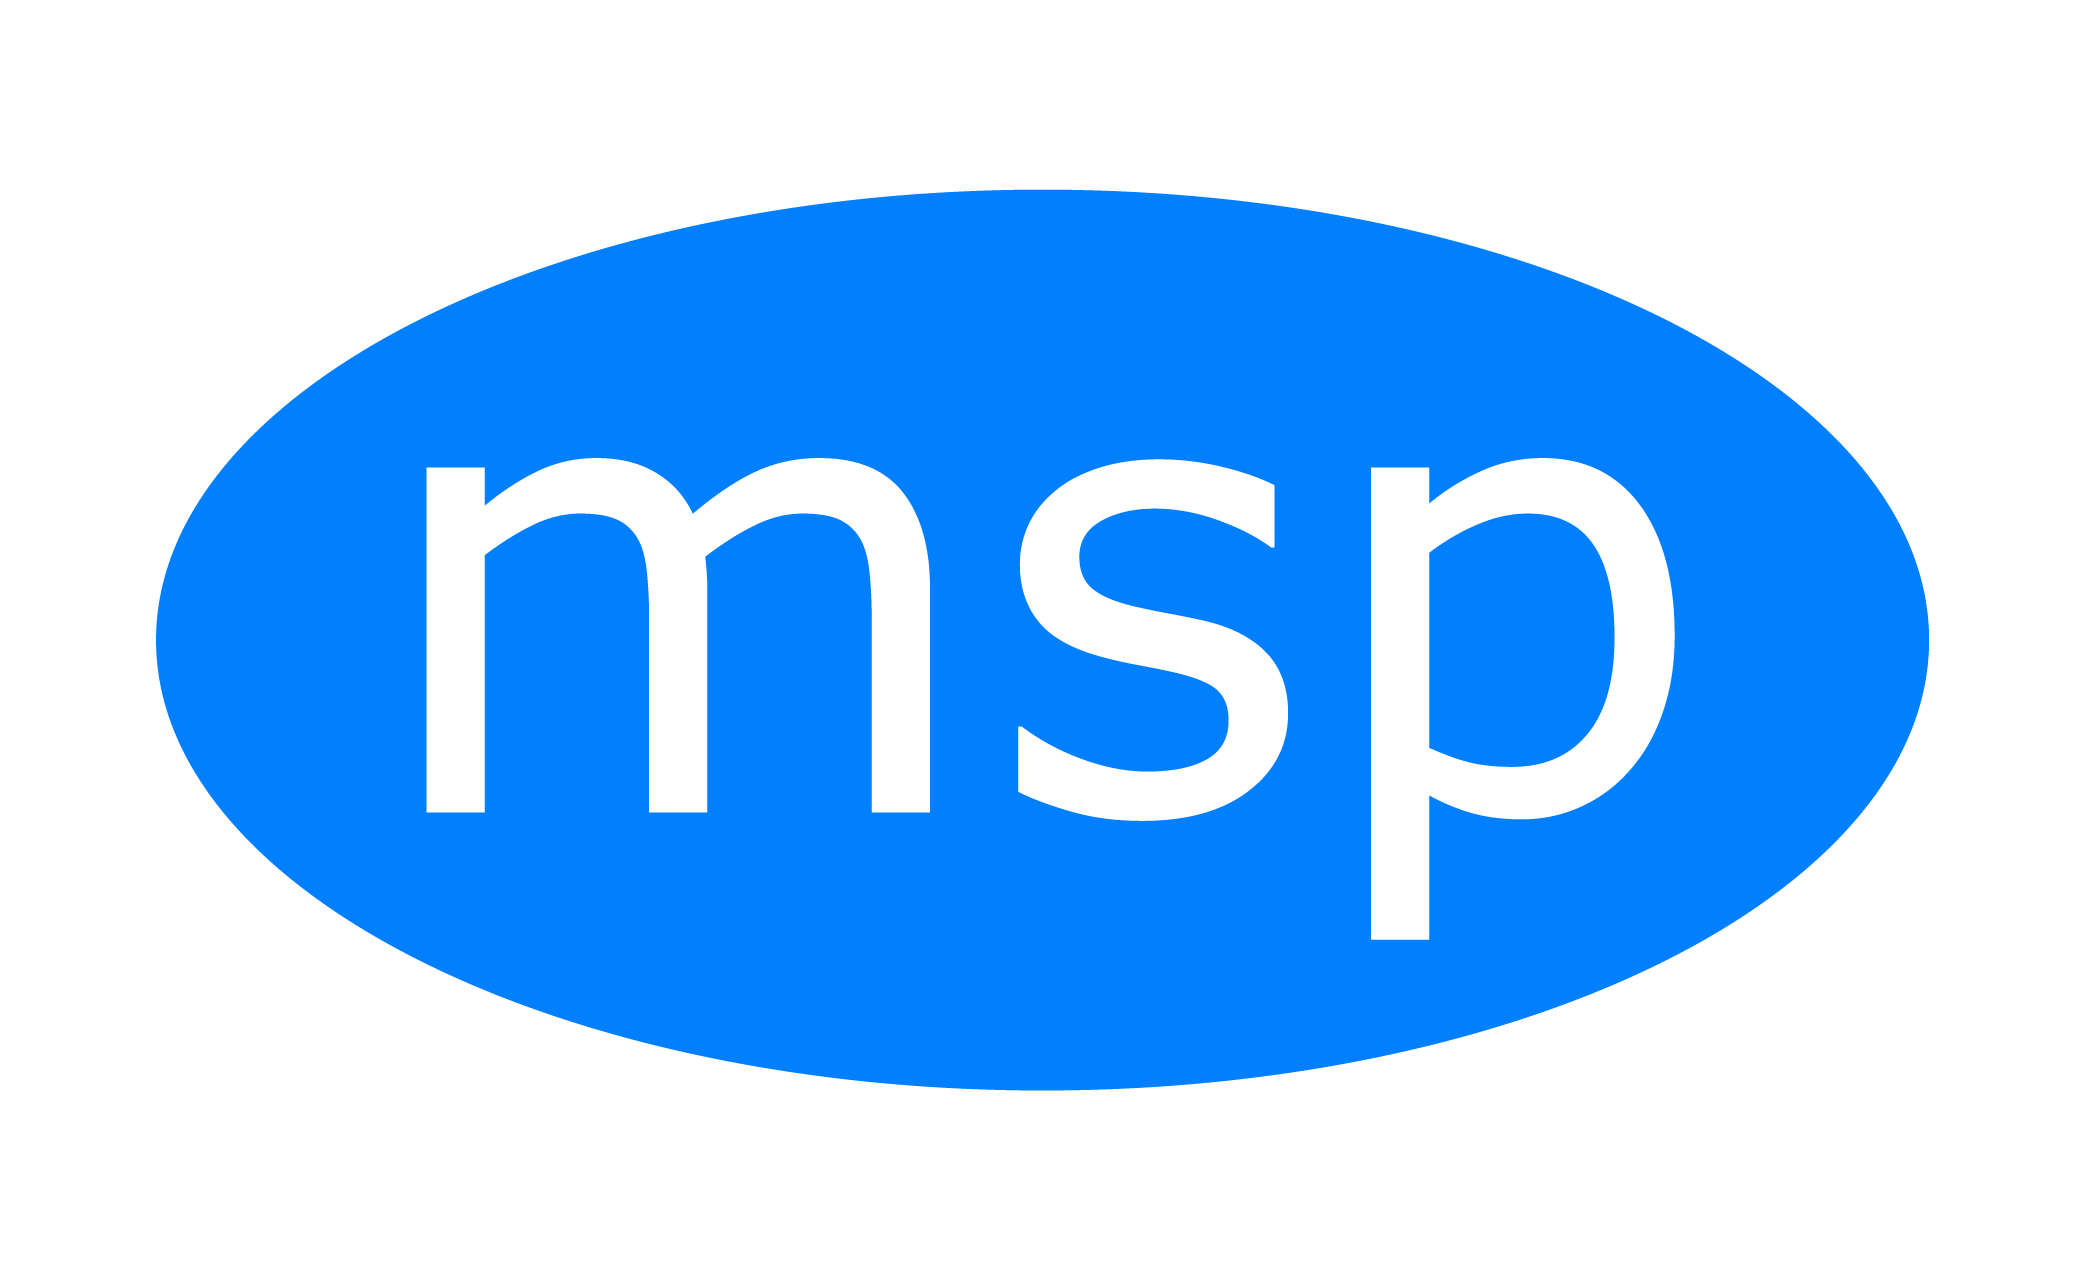 Metrology Software Products Ltd (MSP)